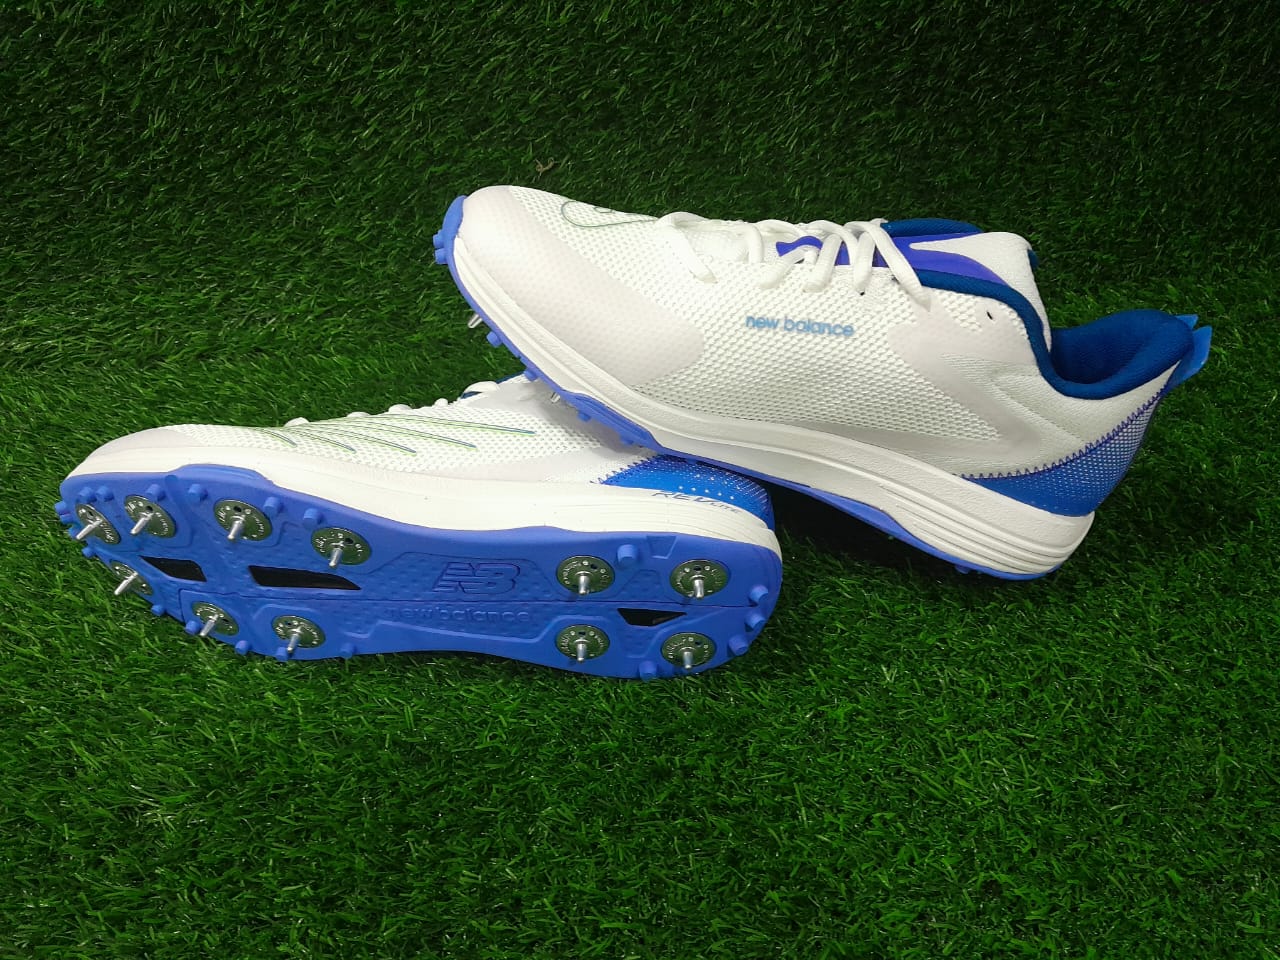 New Balance CK10 R5 Spike Cricket Shoes White Blue